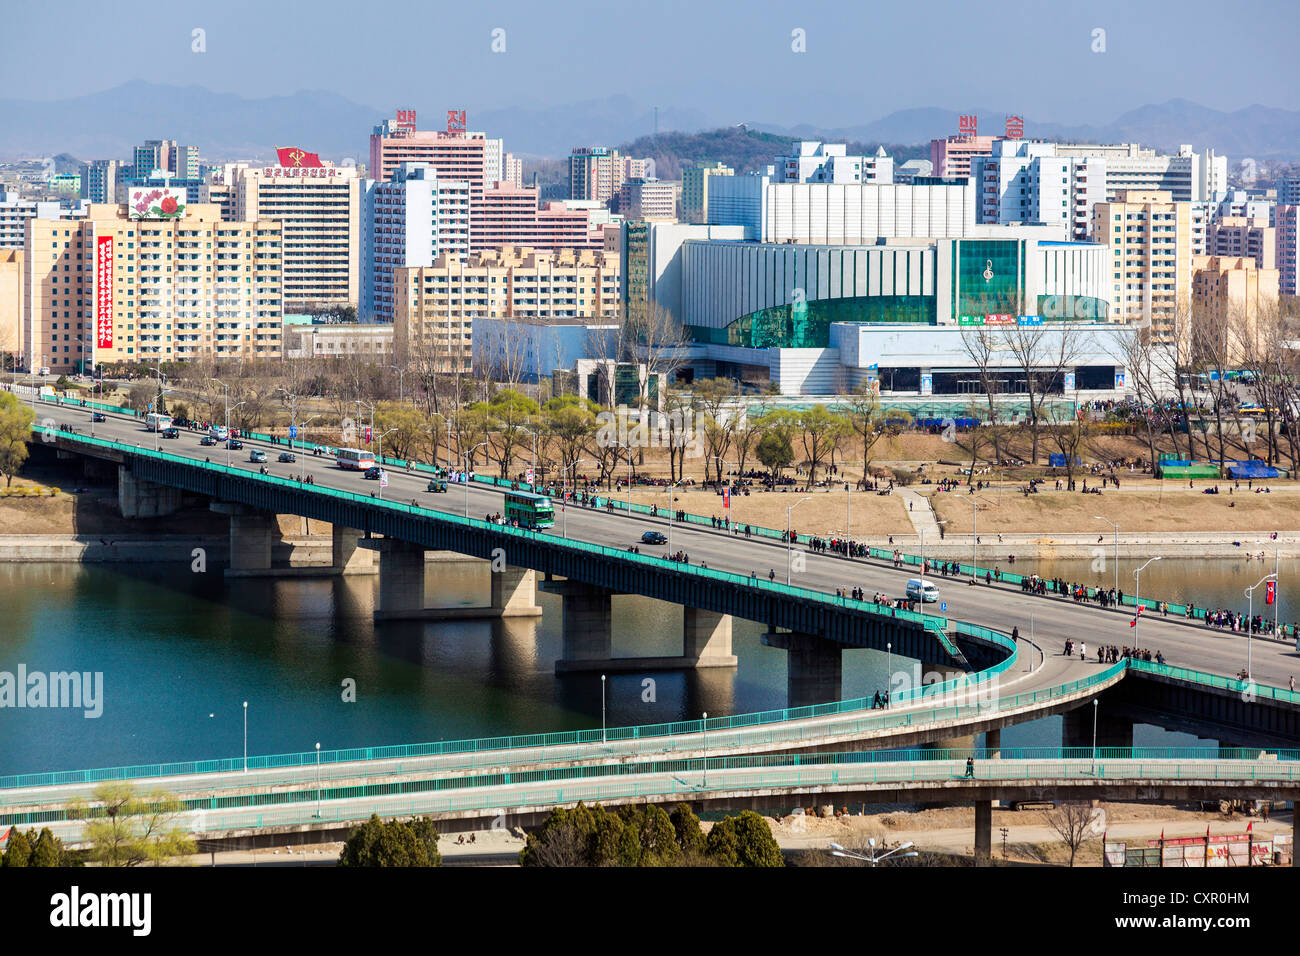 Democratic Peoples's Republic of Korea (DPRK), North Korea, Pyongyang, Rungna Bridge spanning the river Taedong in central Pyong Stock Photo